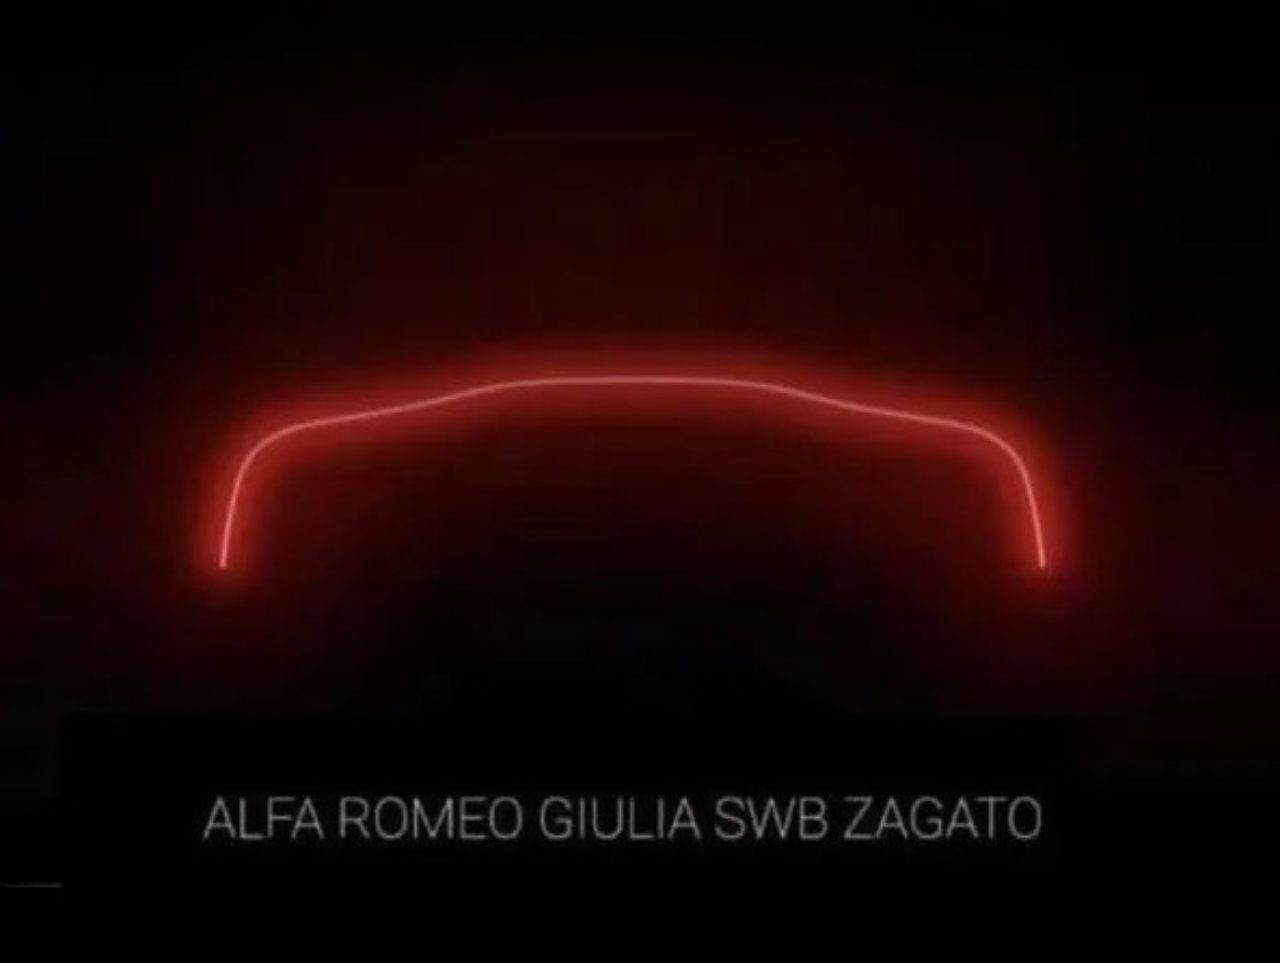 Alfa Romeo Giulia SWB Zagato (Alfa Romeo)